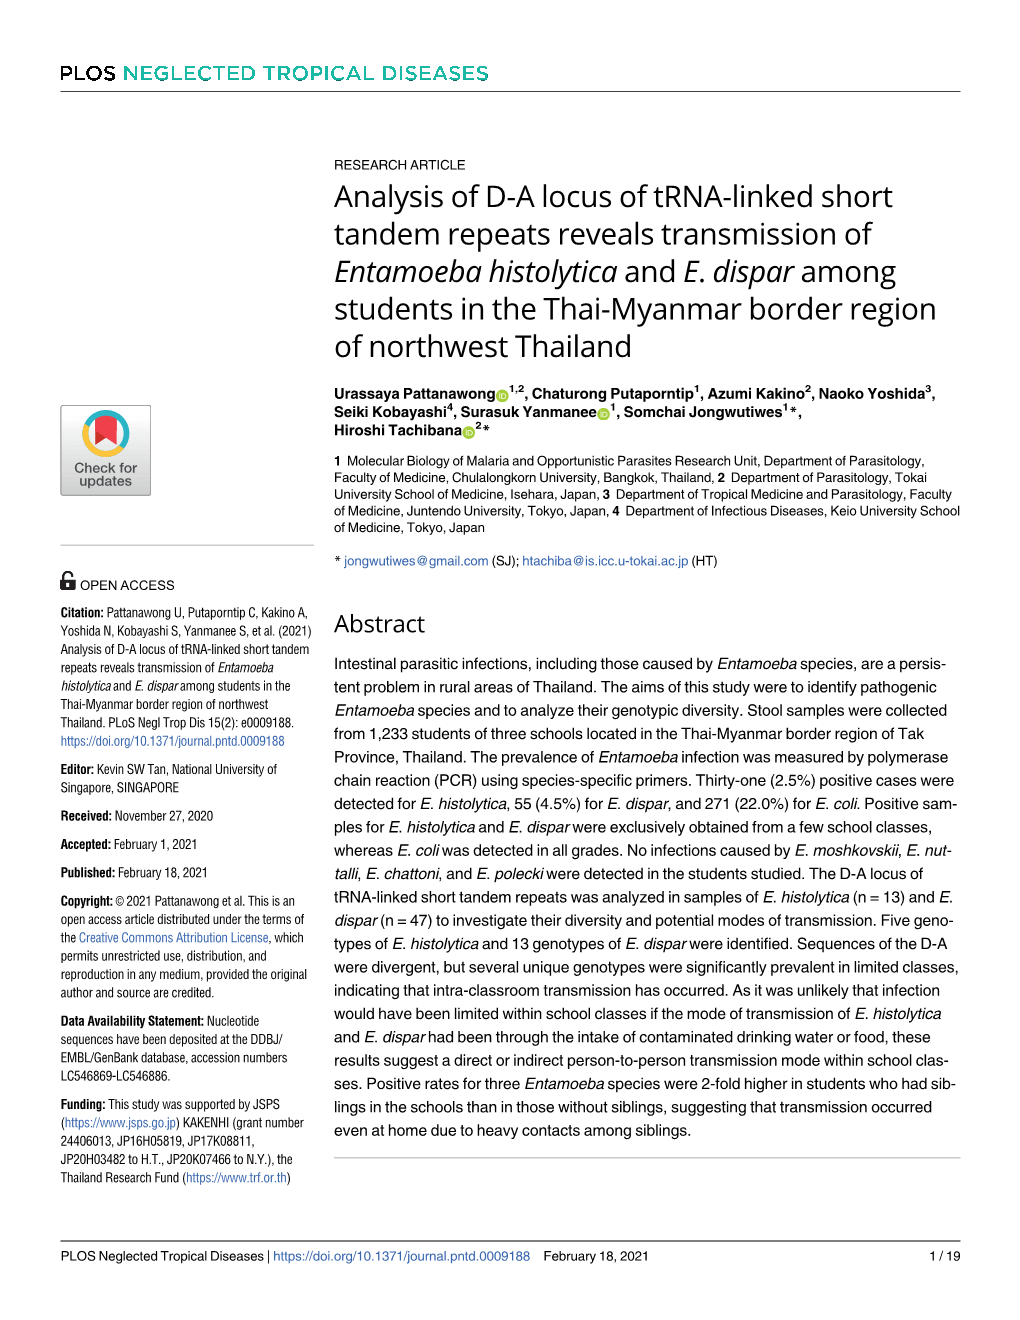 Analysis of DA Locus of Trna-Linked Short Tandem Repeats Reveals